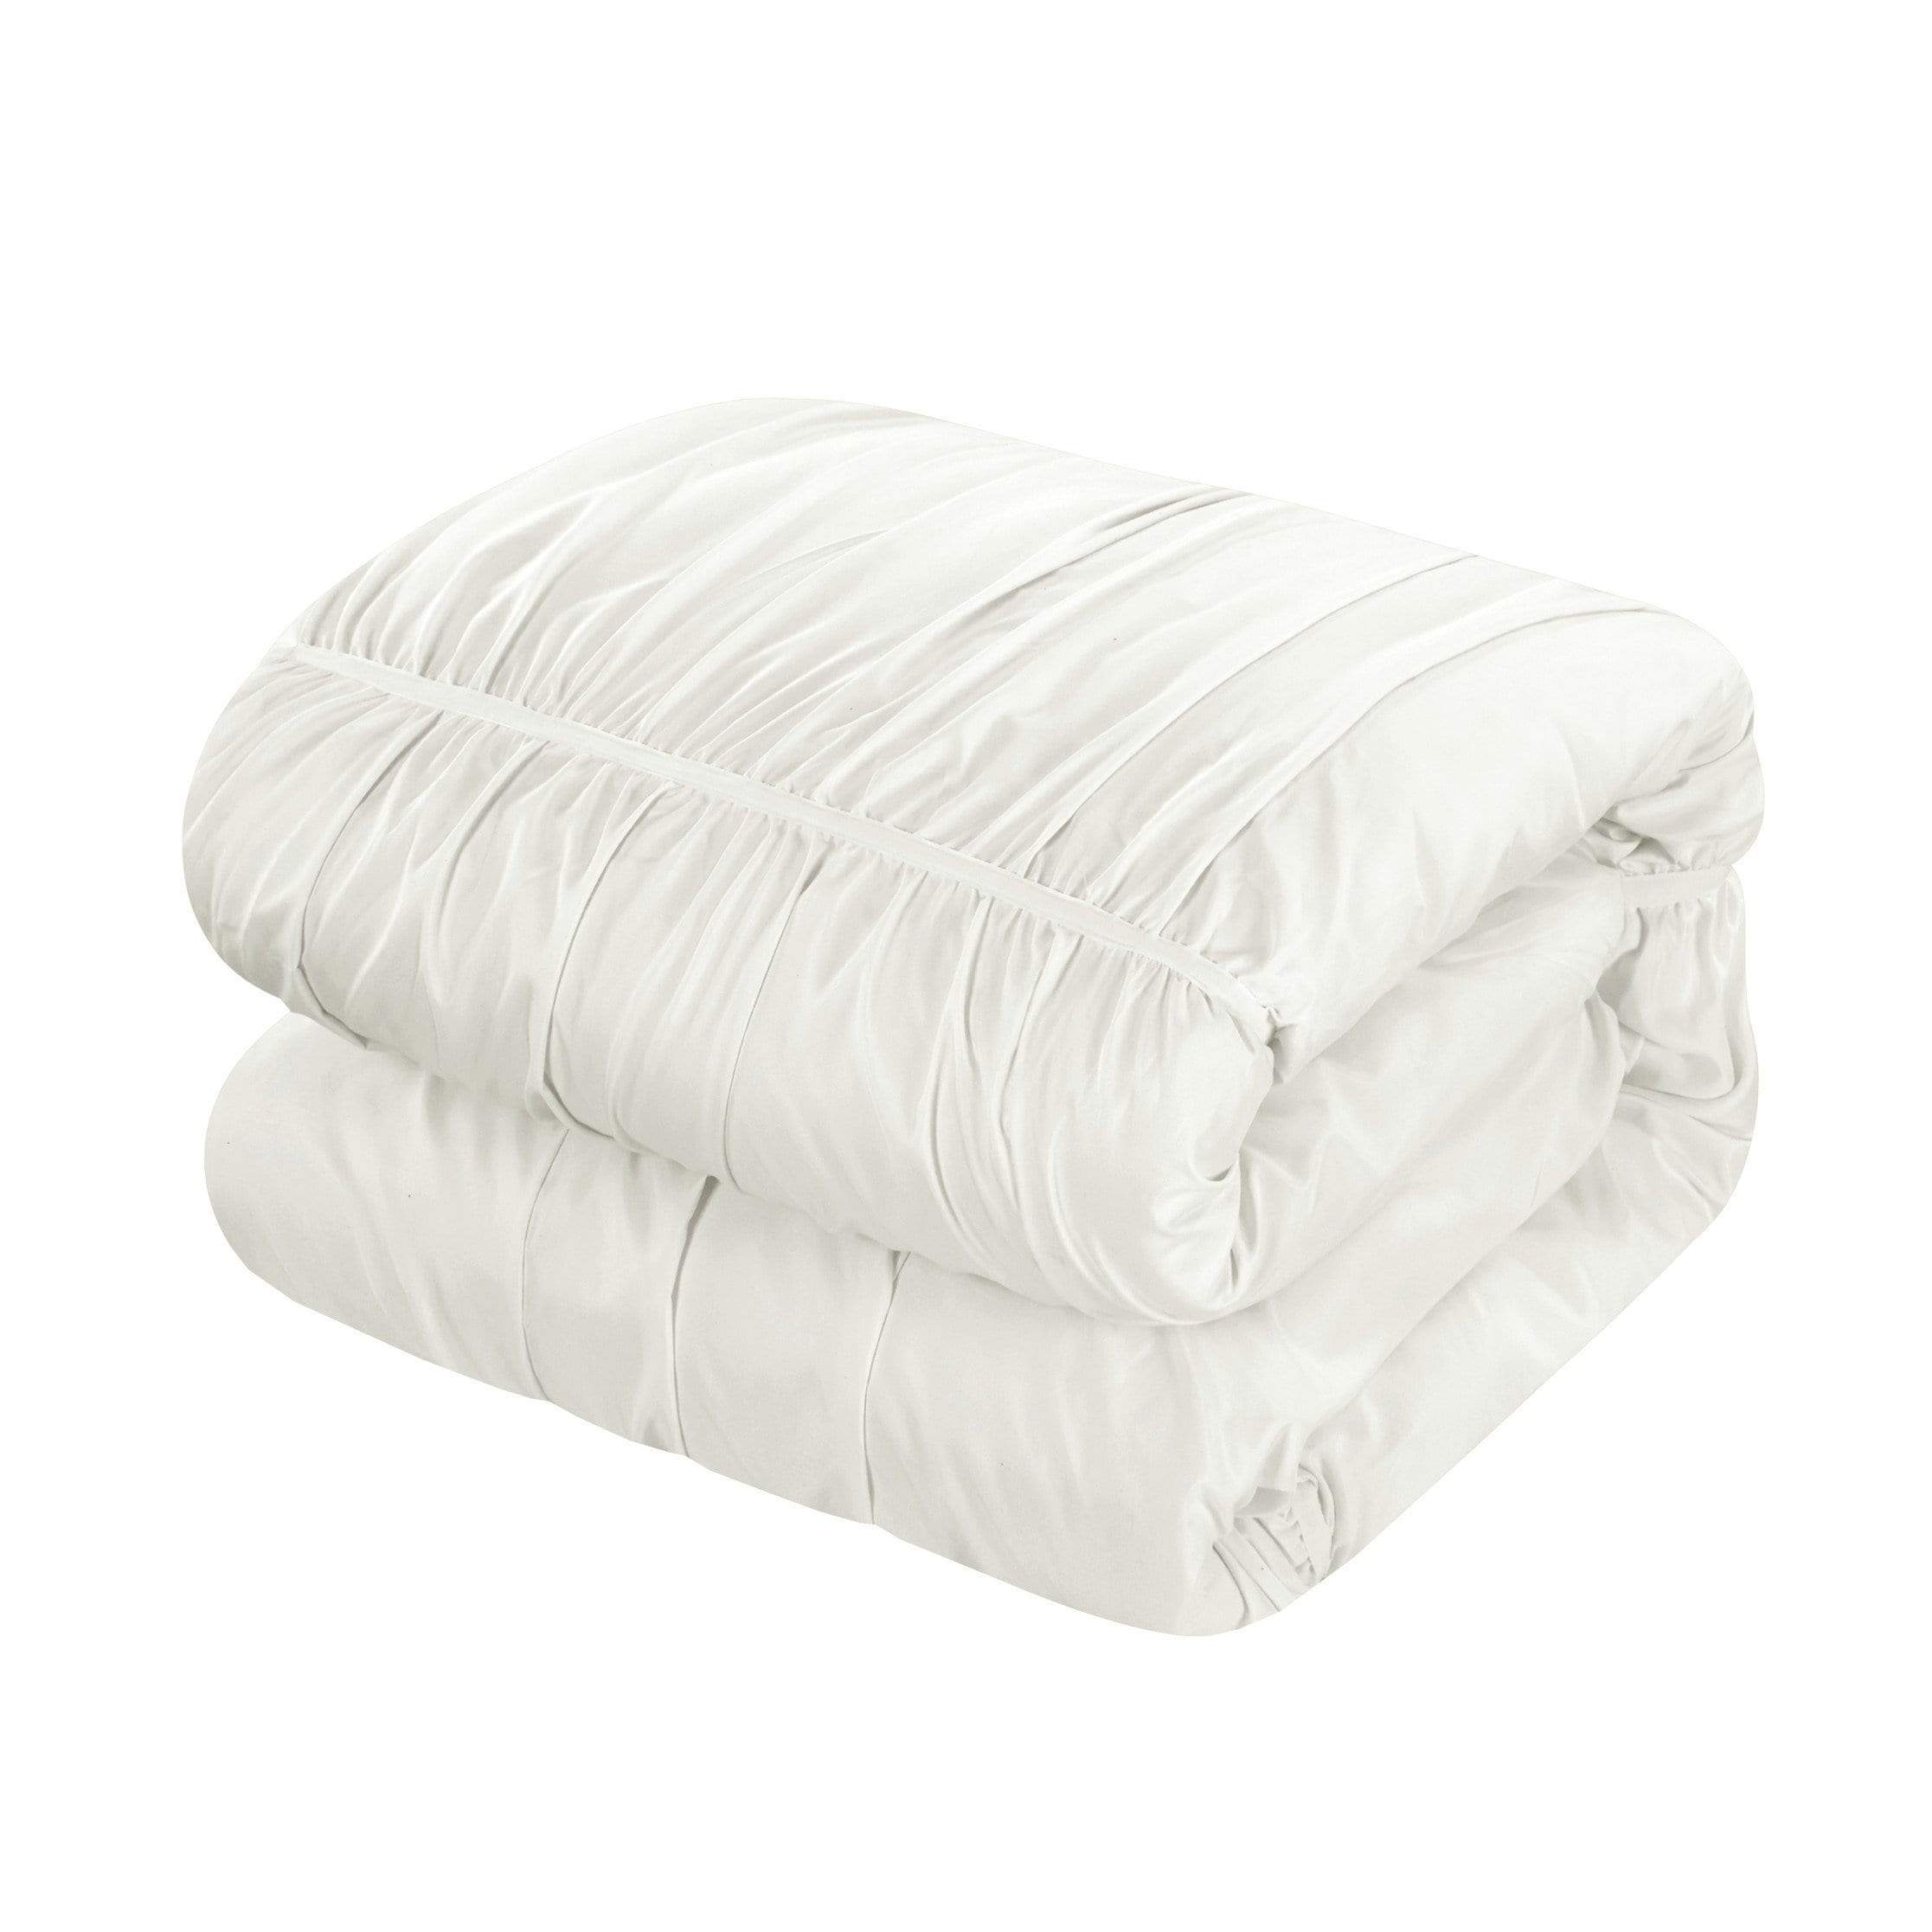 Kaiah 3 Piece Striped Comforter Set